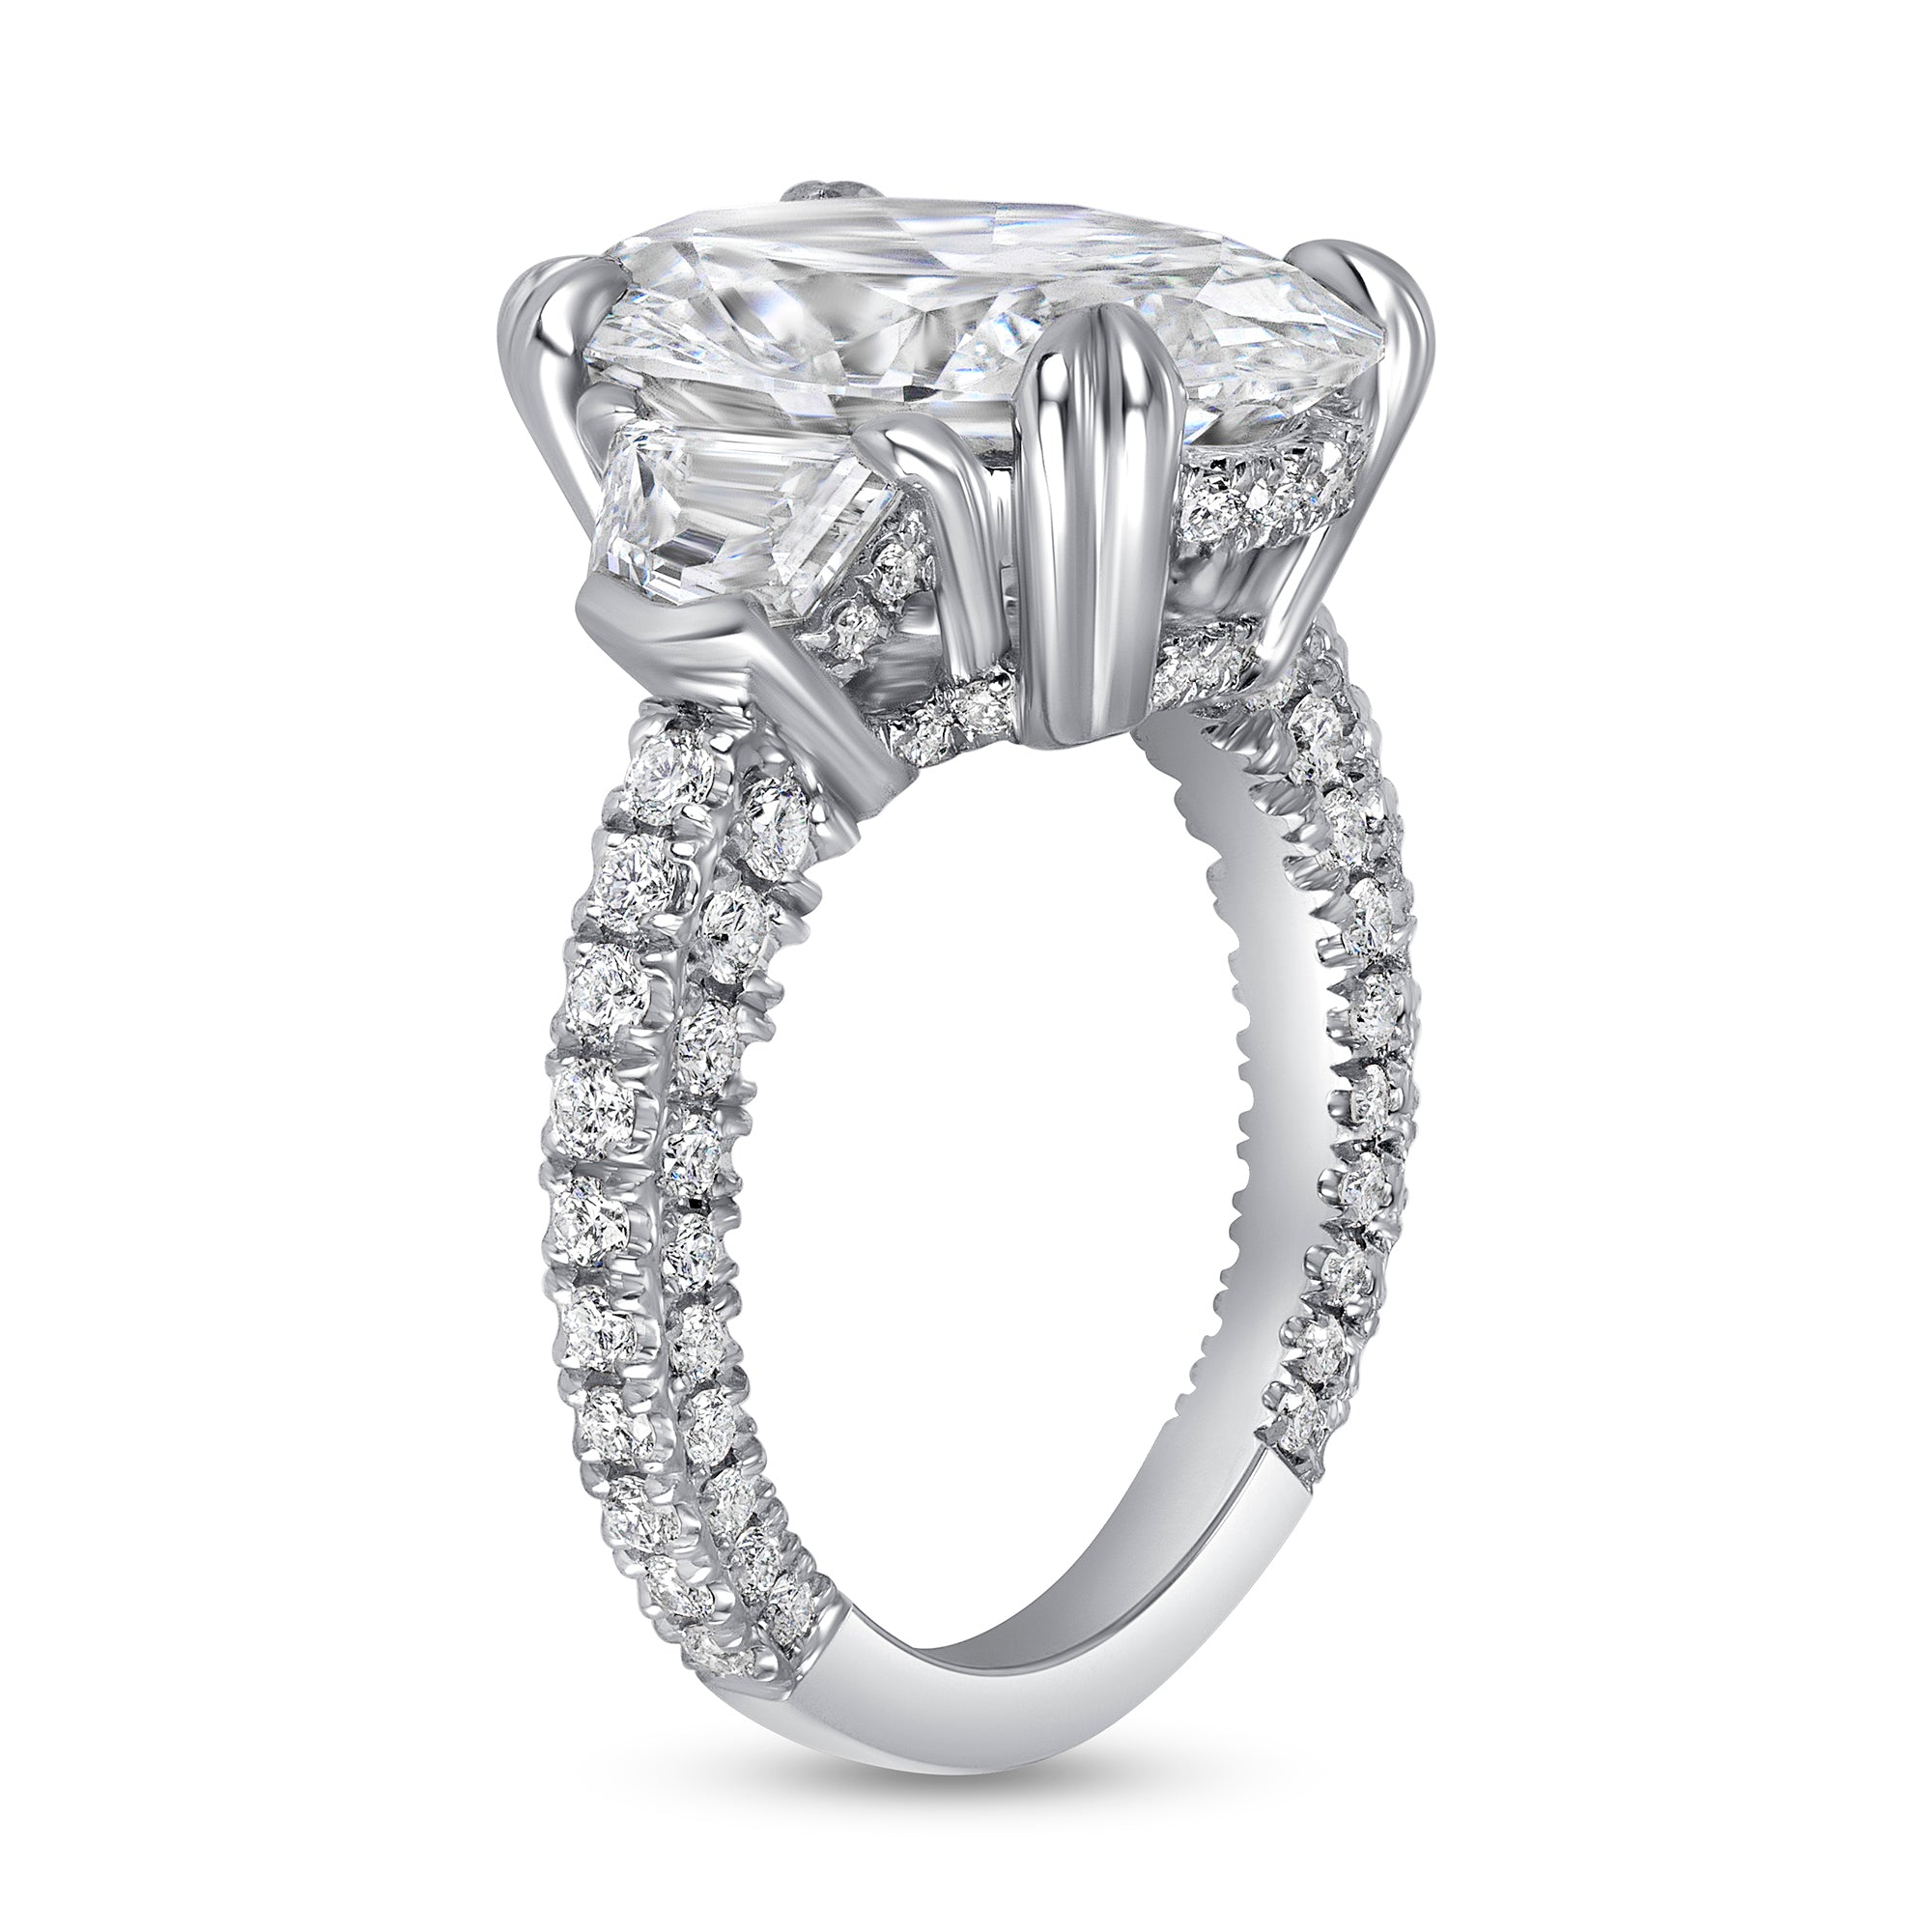 Oval Cut Diamond Three Stone Ring with Trapezoid Cut Diamond Side Stones in Platinum